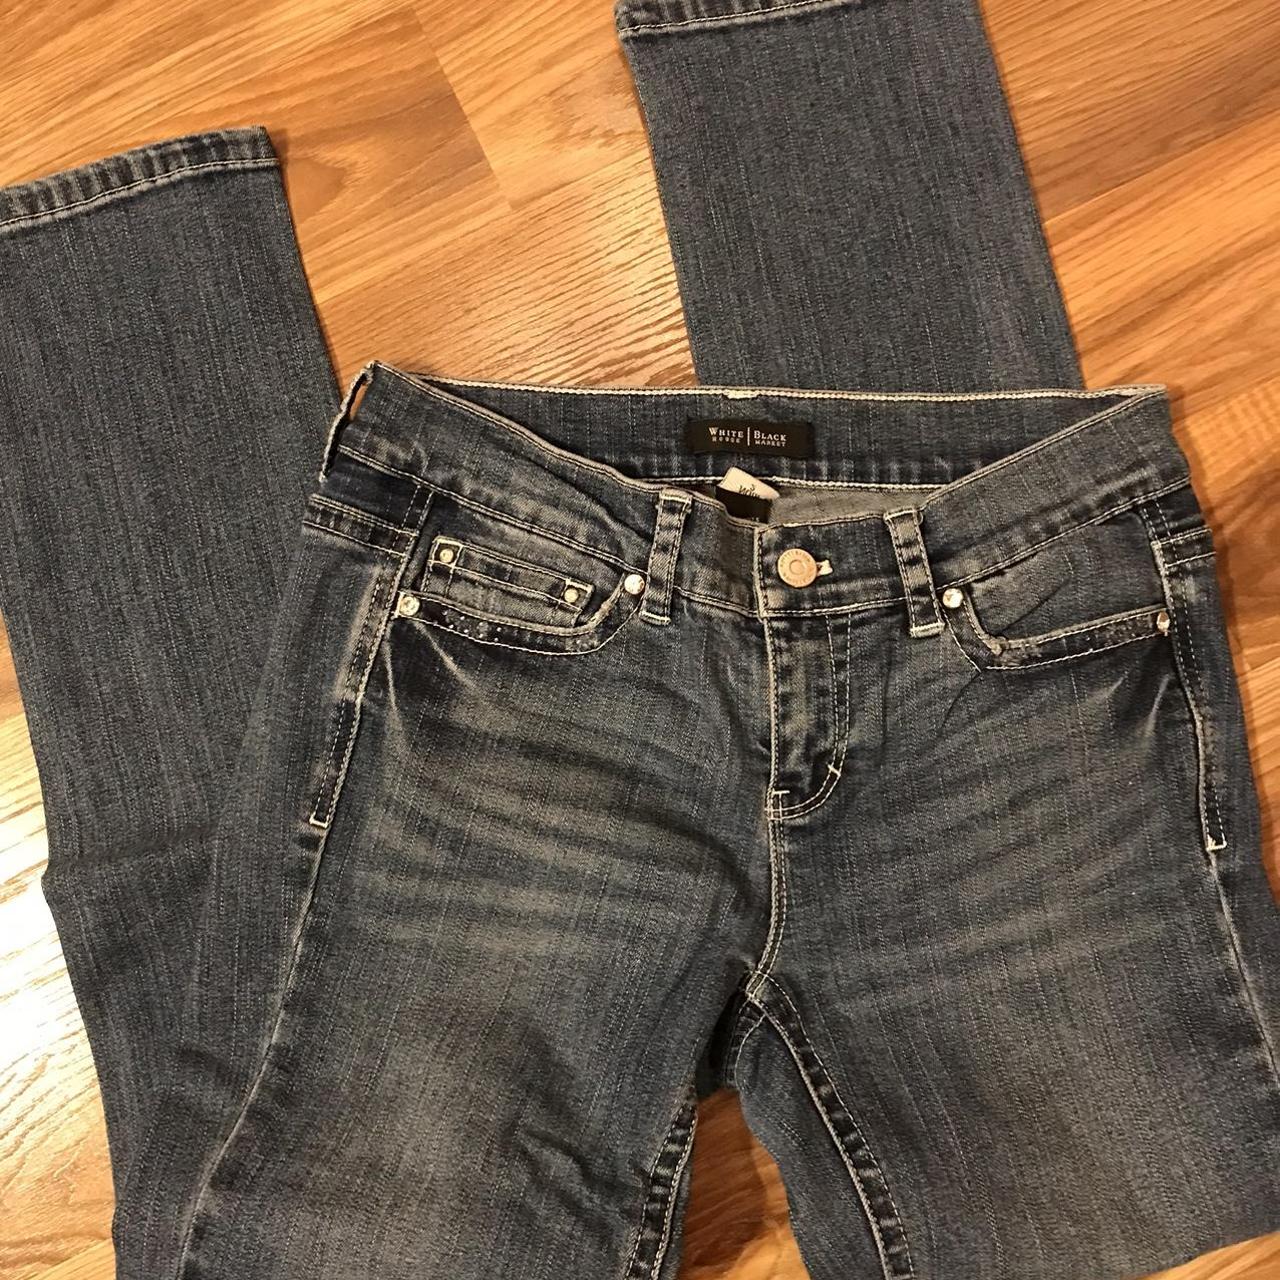 White house black market jeans 27 inch inseam - Depop